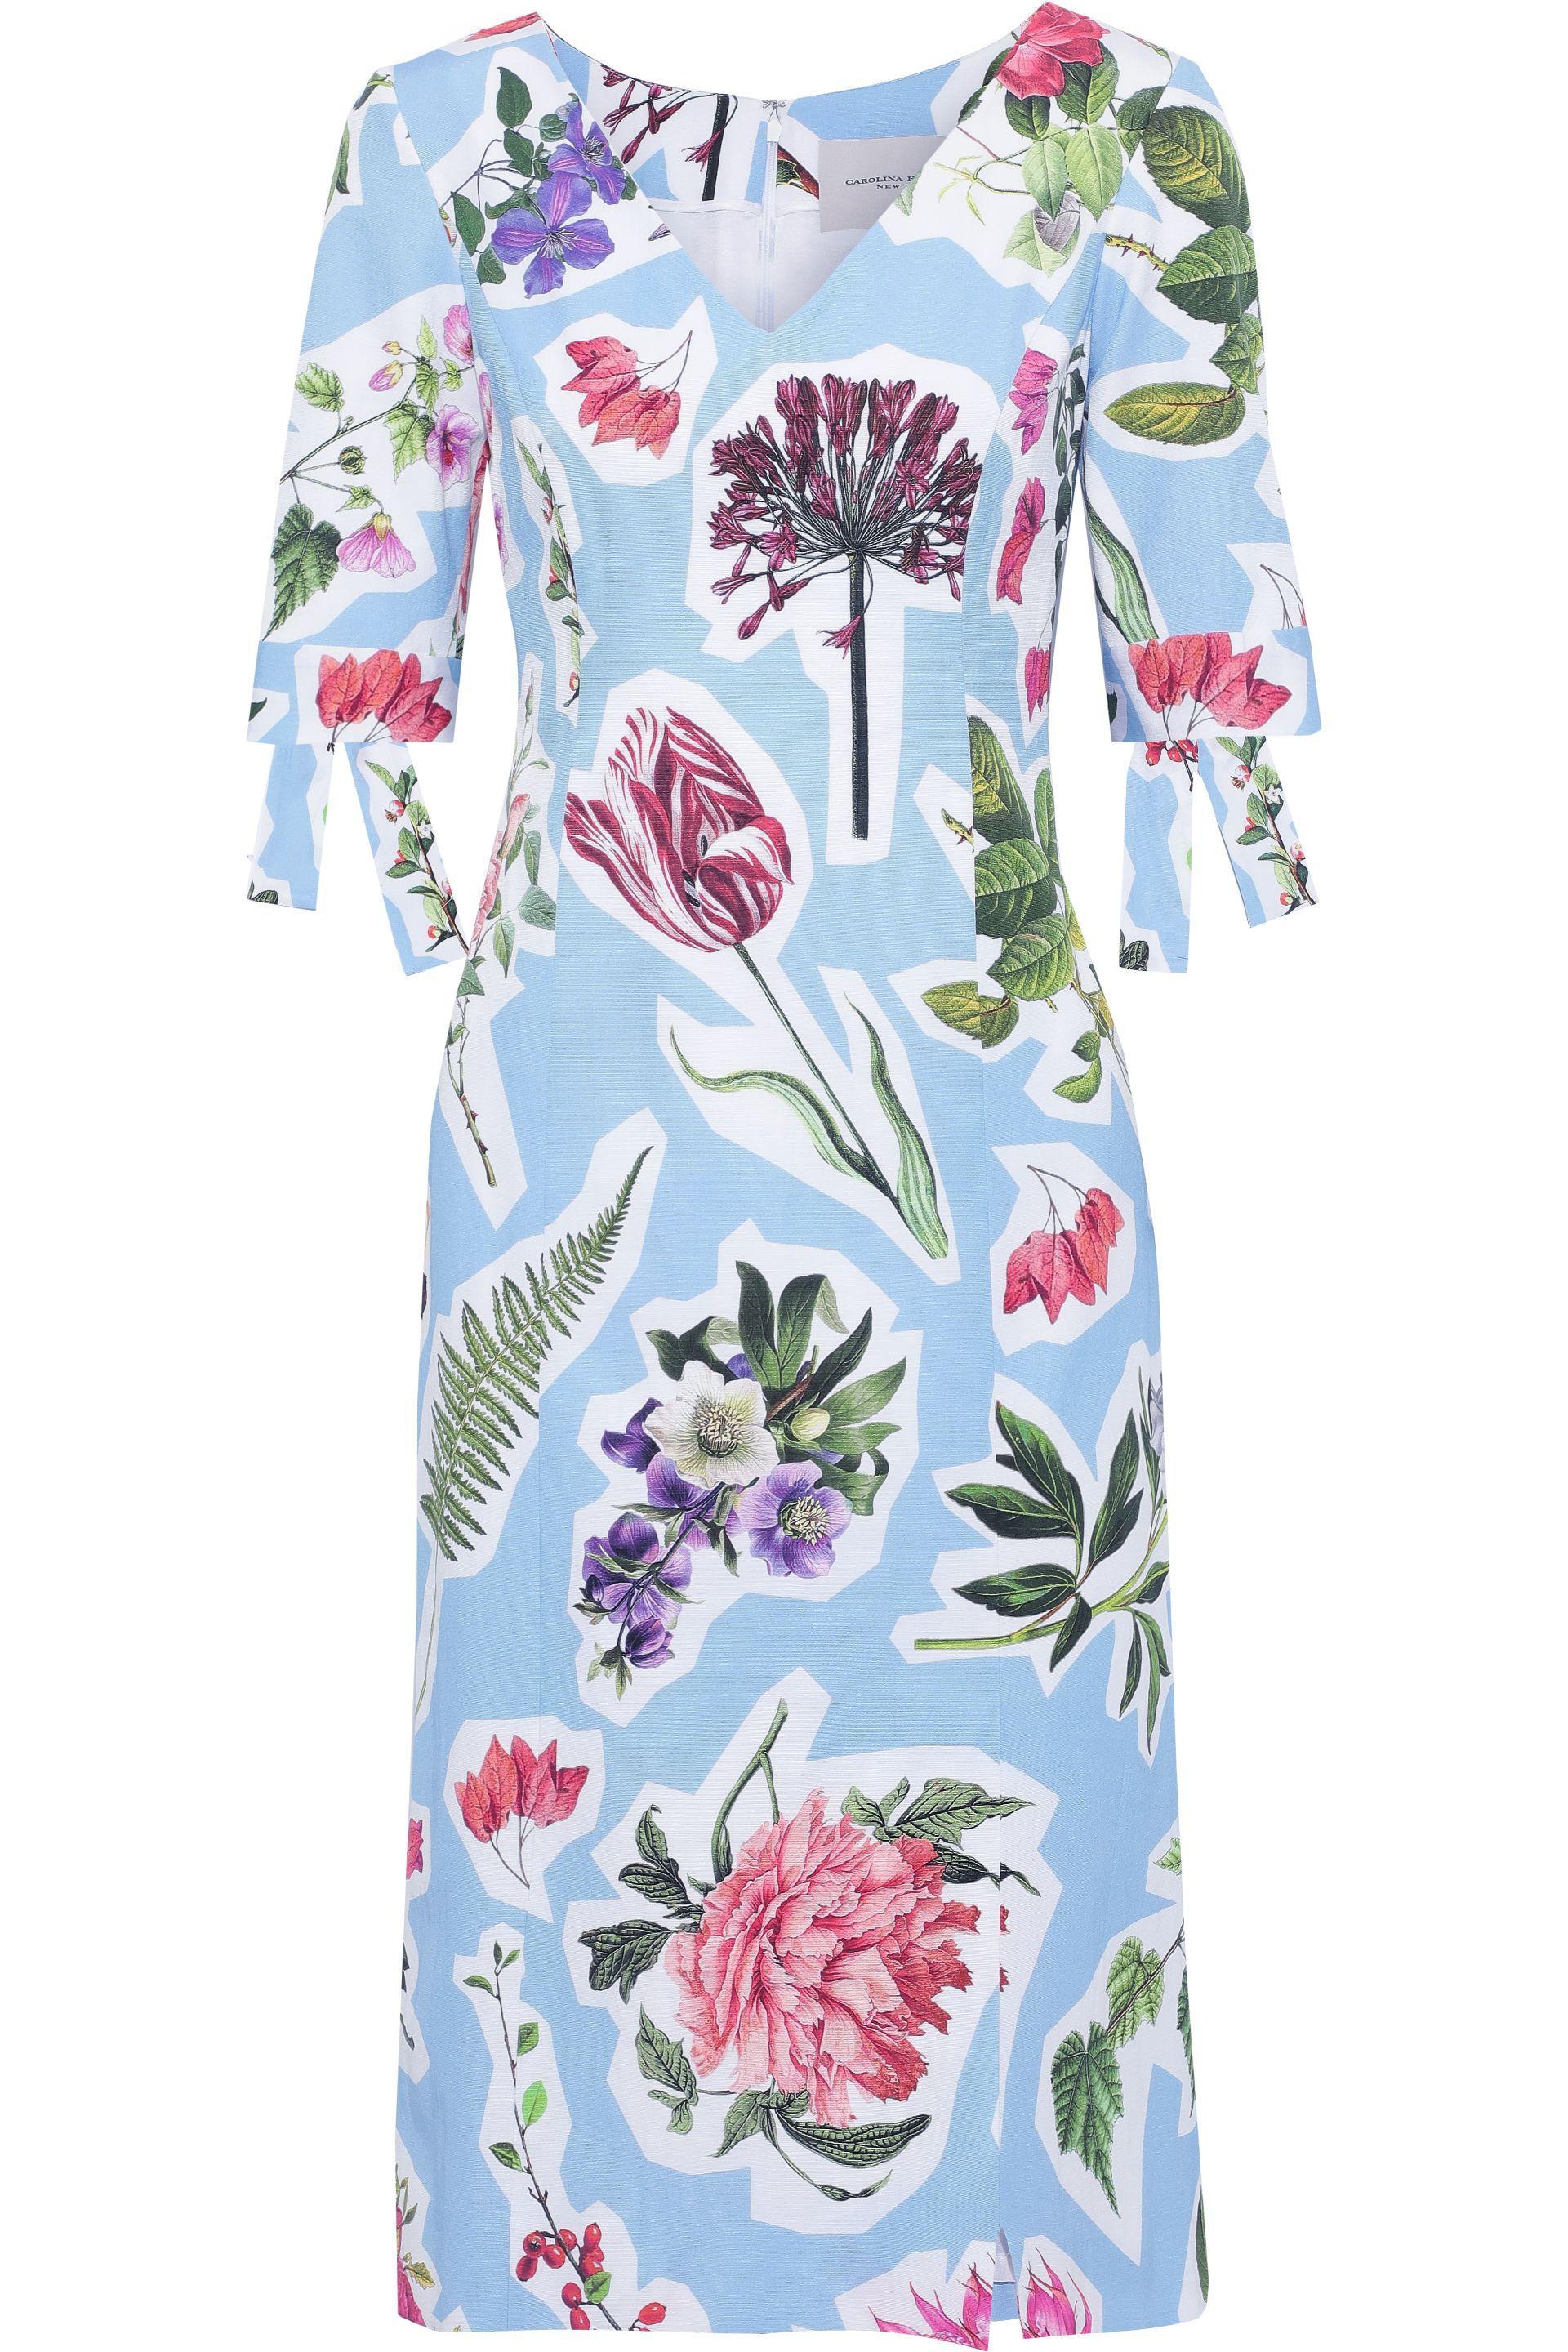 Carolina Herrera Floral Cotton-blend Dress in Blue - Save 50% - Lyst